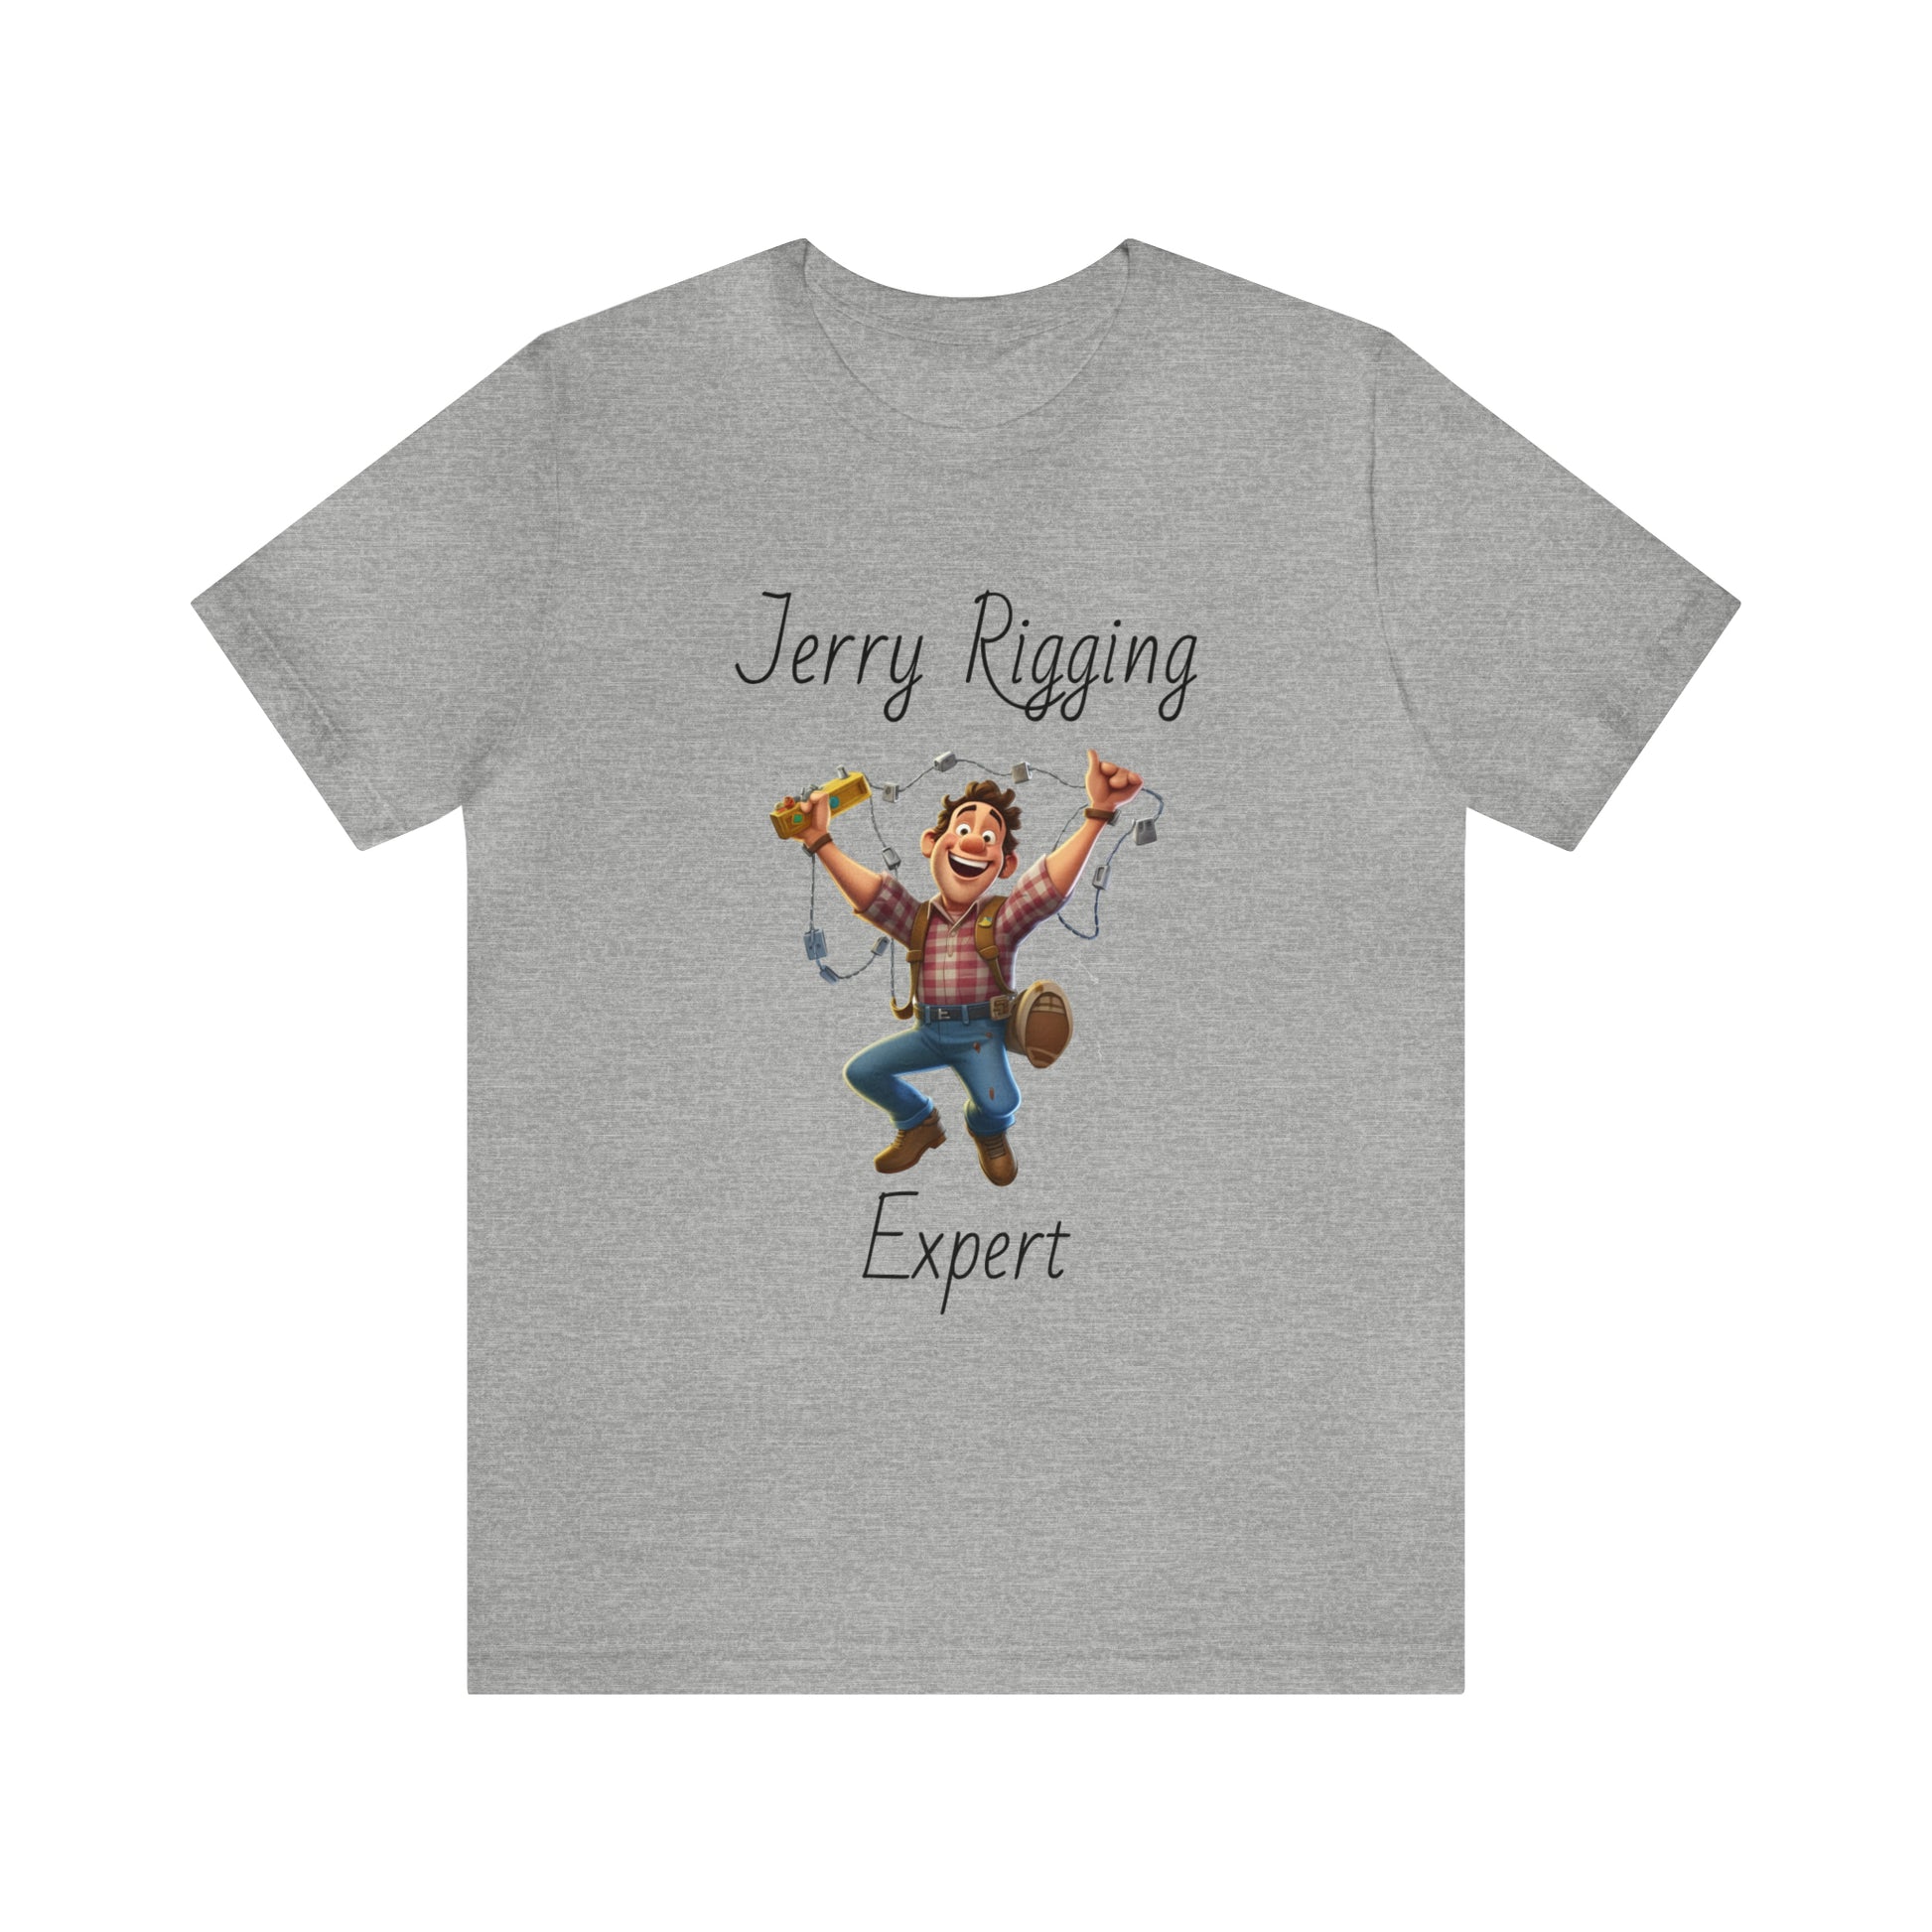 Jerry Rigging Expert Funny Tee Shirt | Jerry Rig Tee Shirt | DIY Lover Tee Shirt | Fix it up Contractor Tee | Home improvement Tee Shirt - CrazyTomTShirts